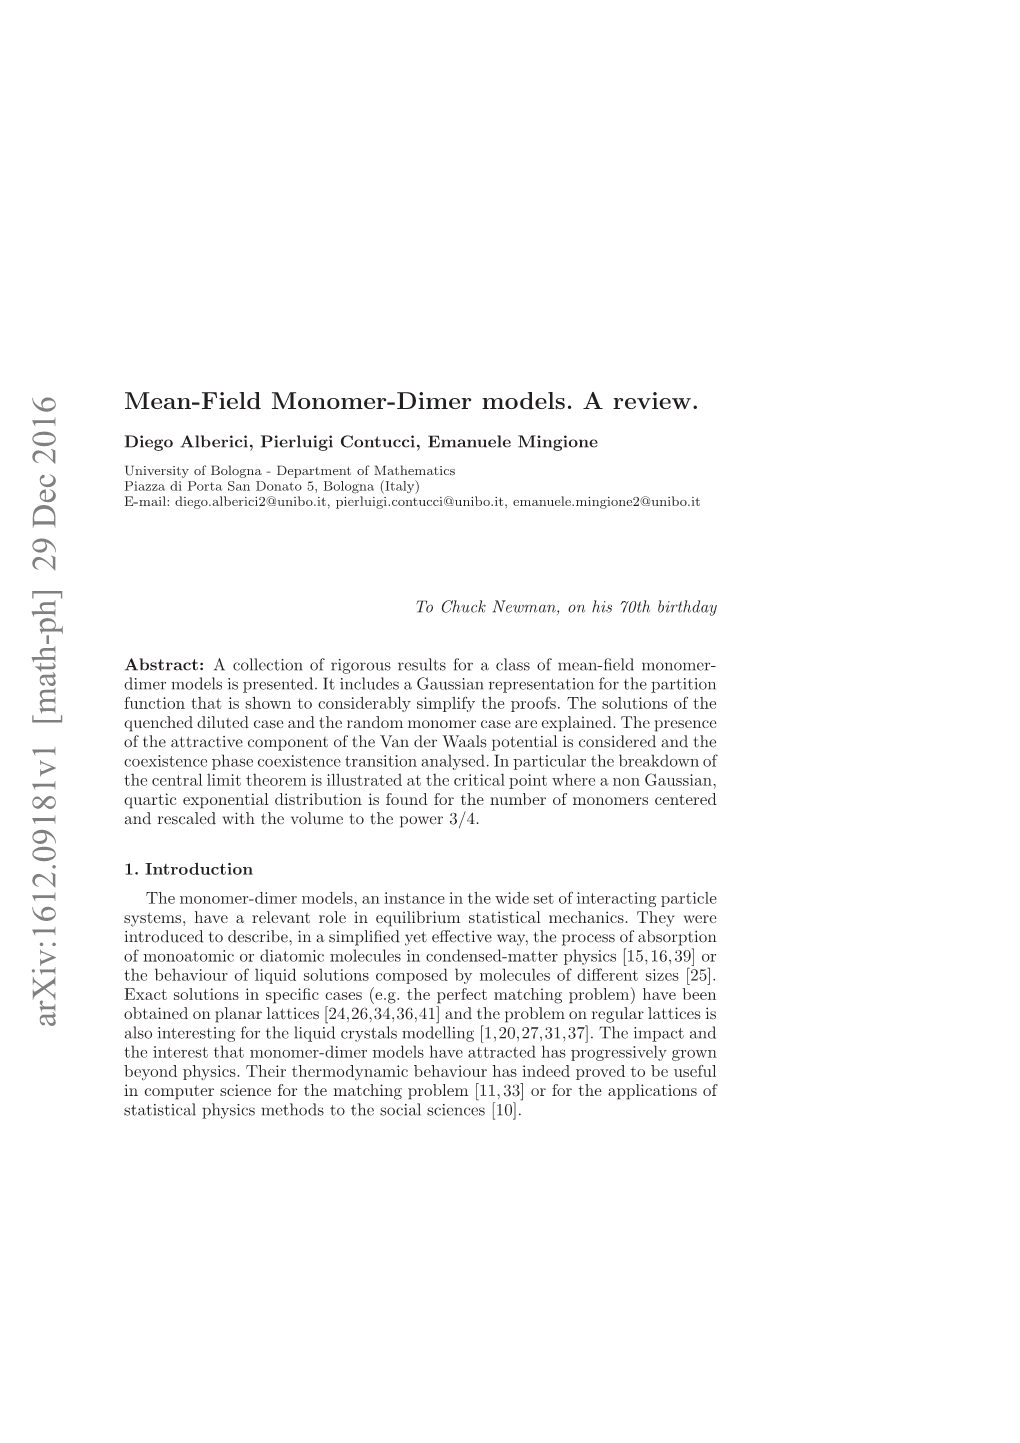 Mean-Field Monomer-Dimer Models. a Review. 3